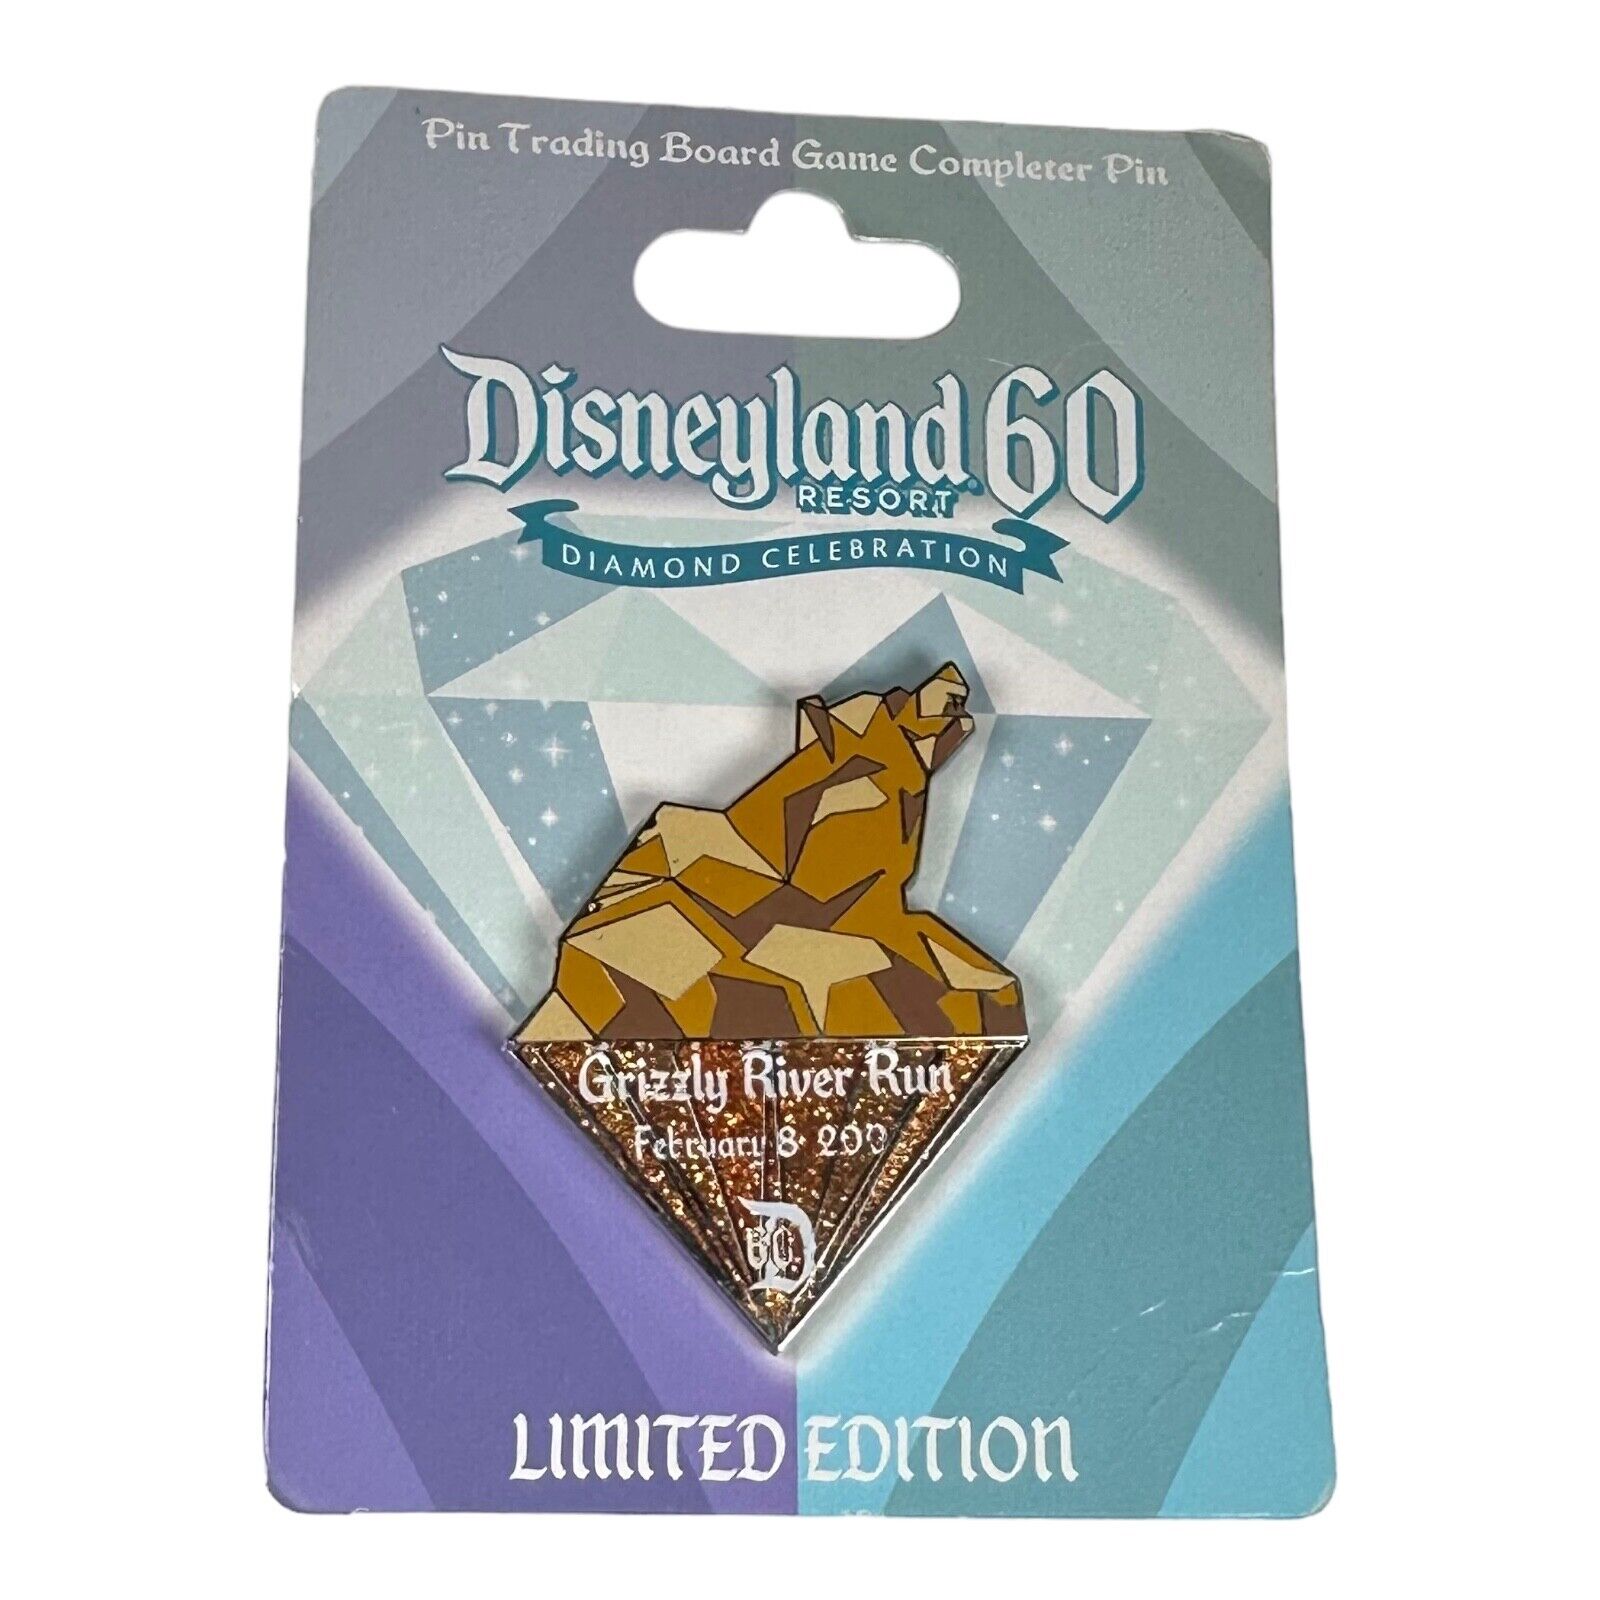 2015 Disney Parks Disneyland 60th Diamond Celebration Pin - Grizzly River Run